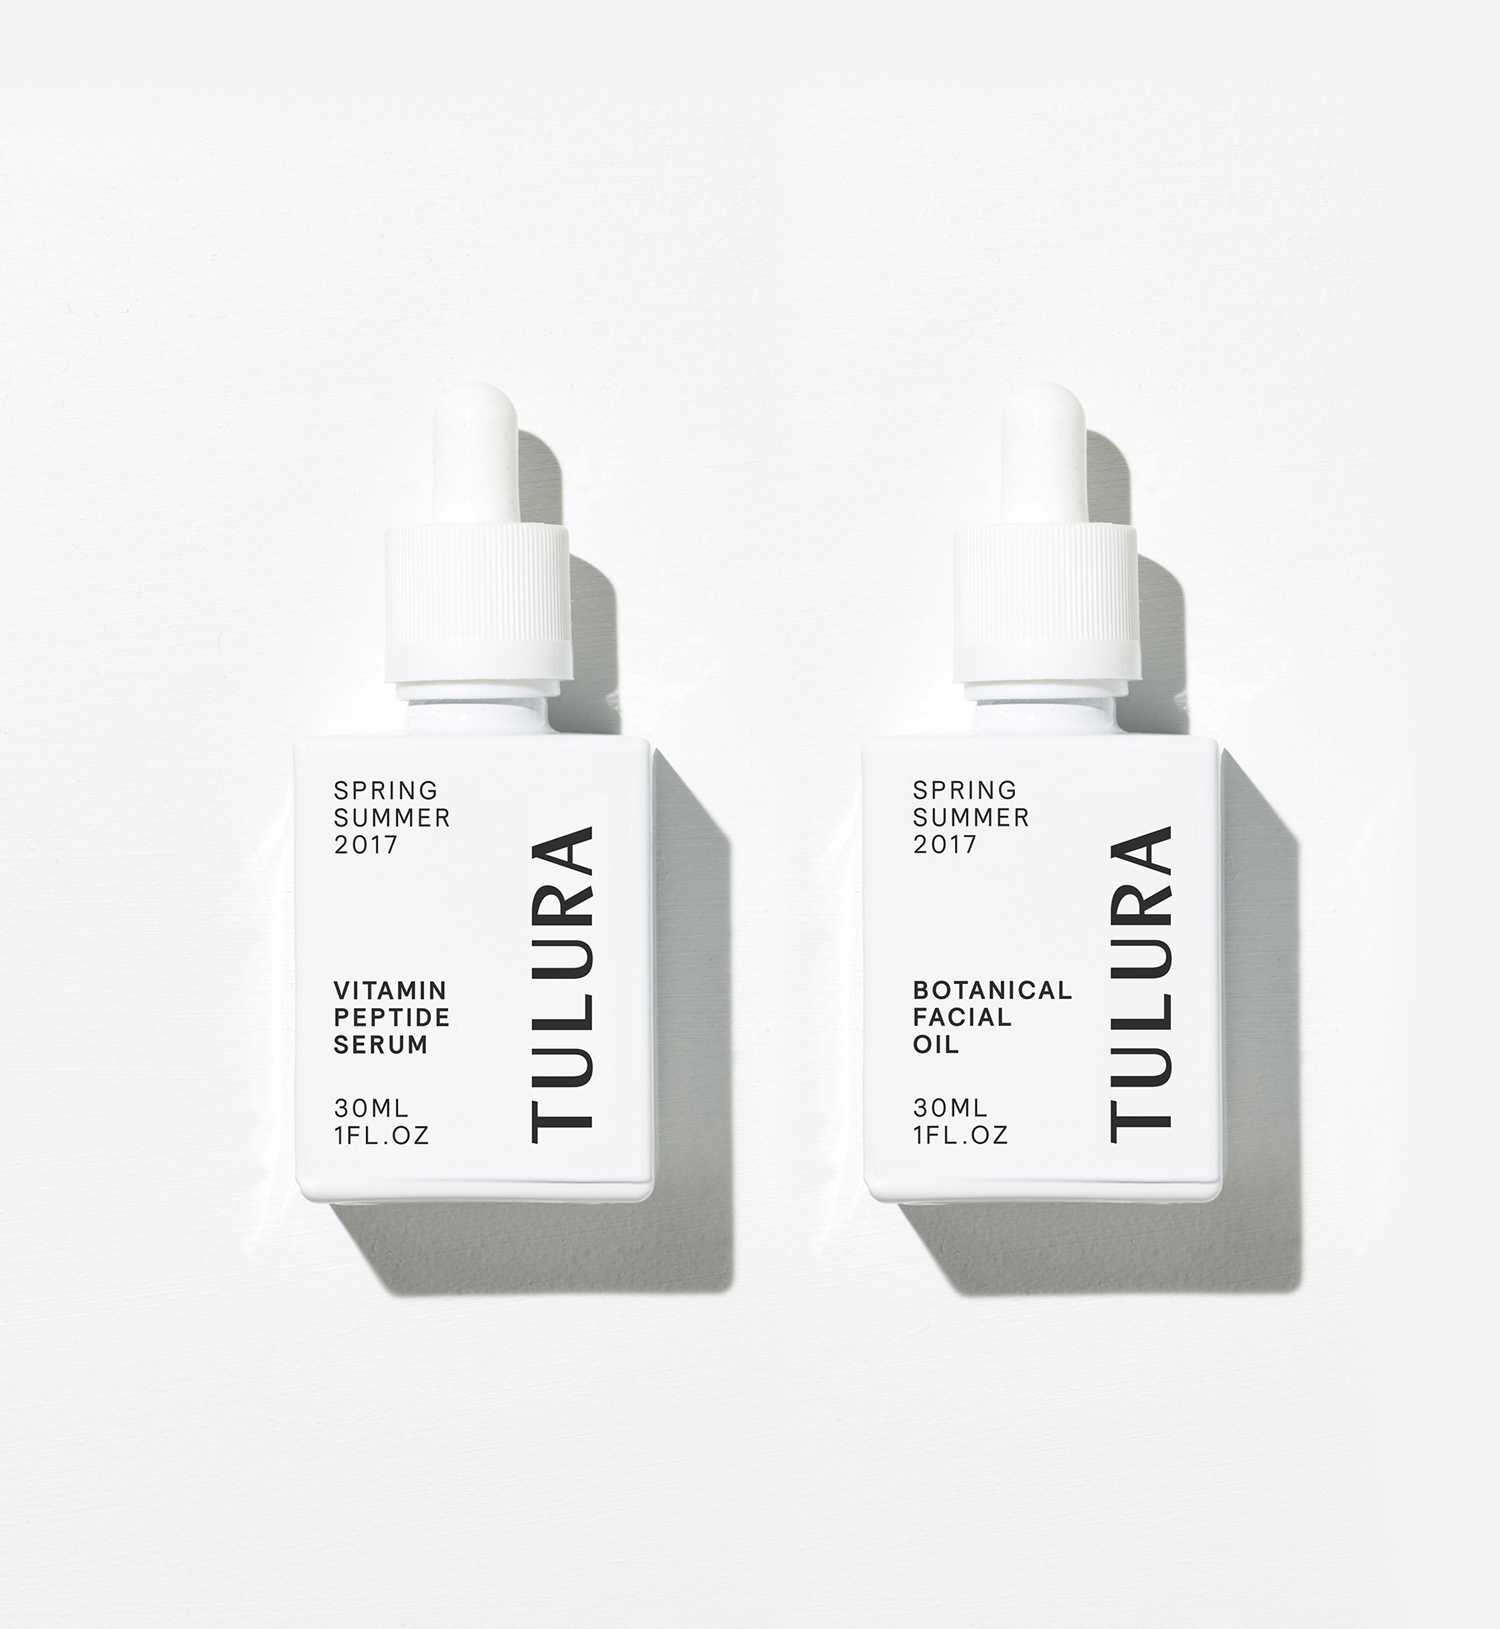 Packaging design by Leeds-based studio Build for New York skincare brand Tulura